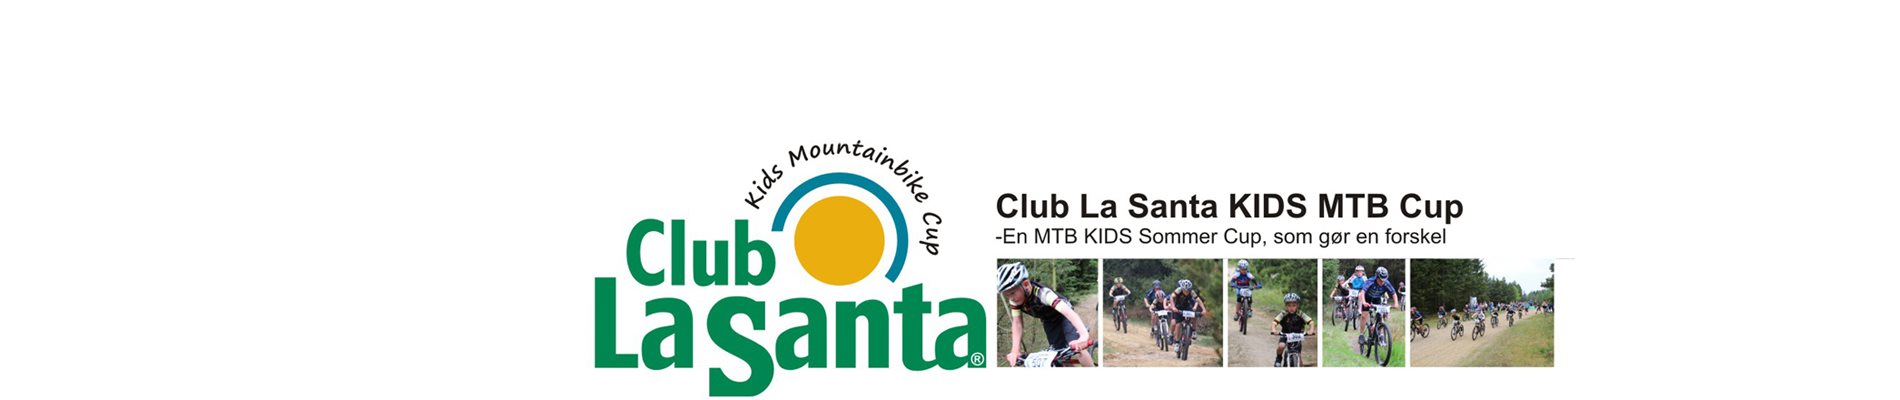 CLUB LA SANTA KIDS MTB CUP '19 - Samlet CUP